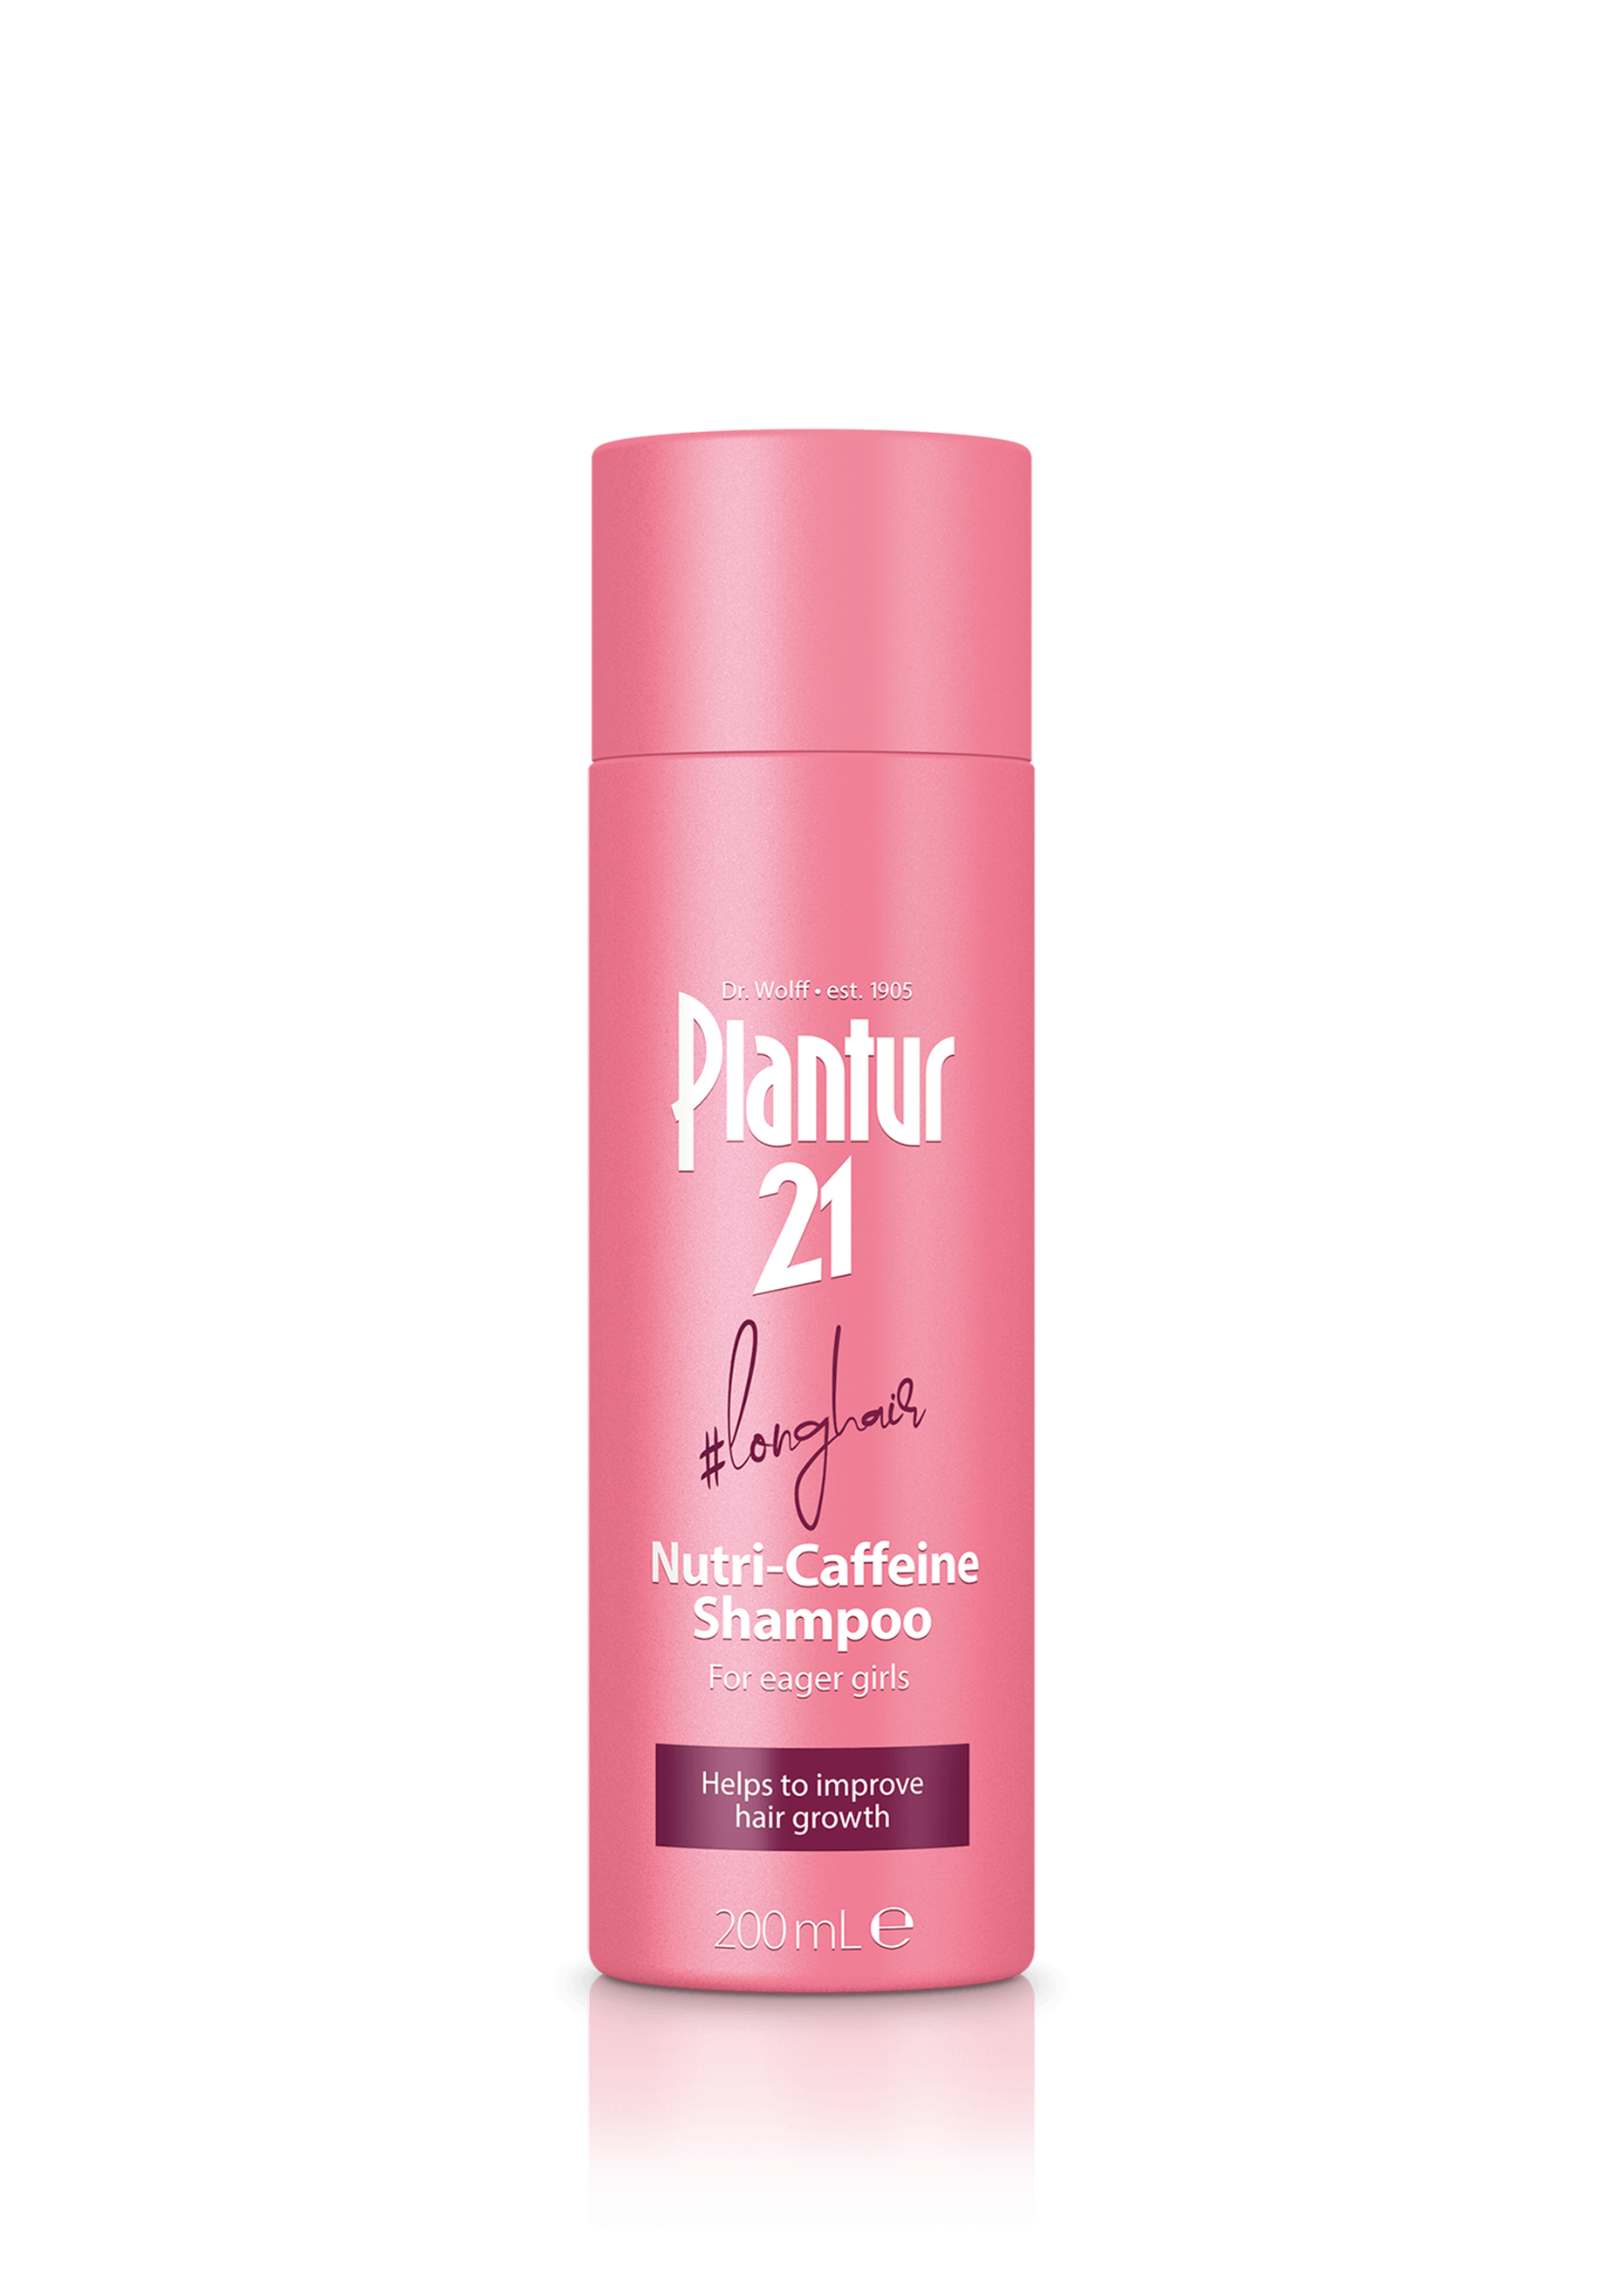 Plantur 21 #longhair Nutri-Caffeine Shampoo - For eager girls